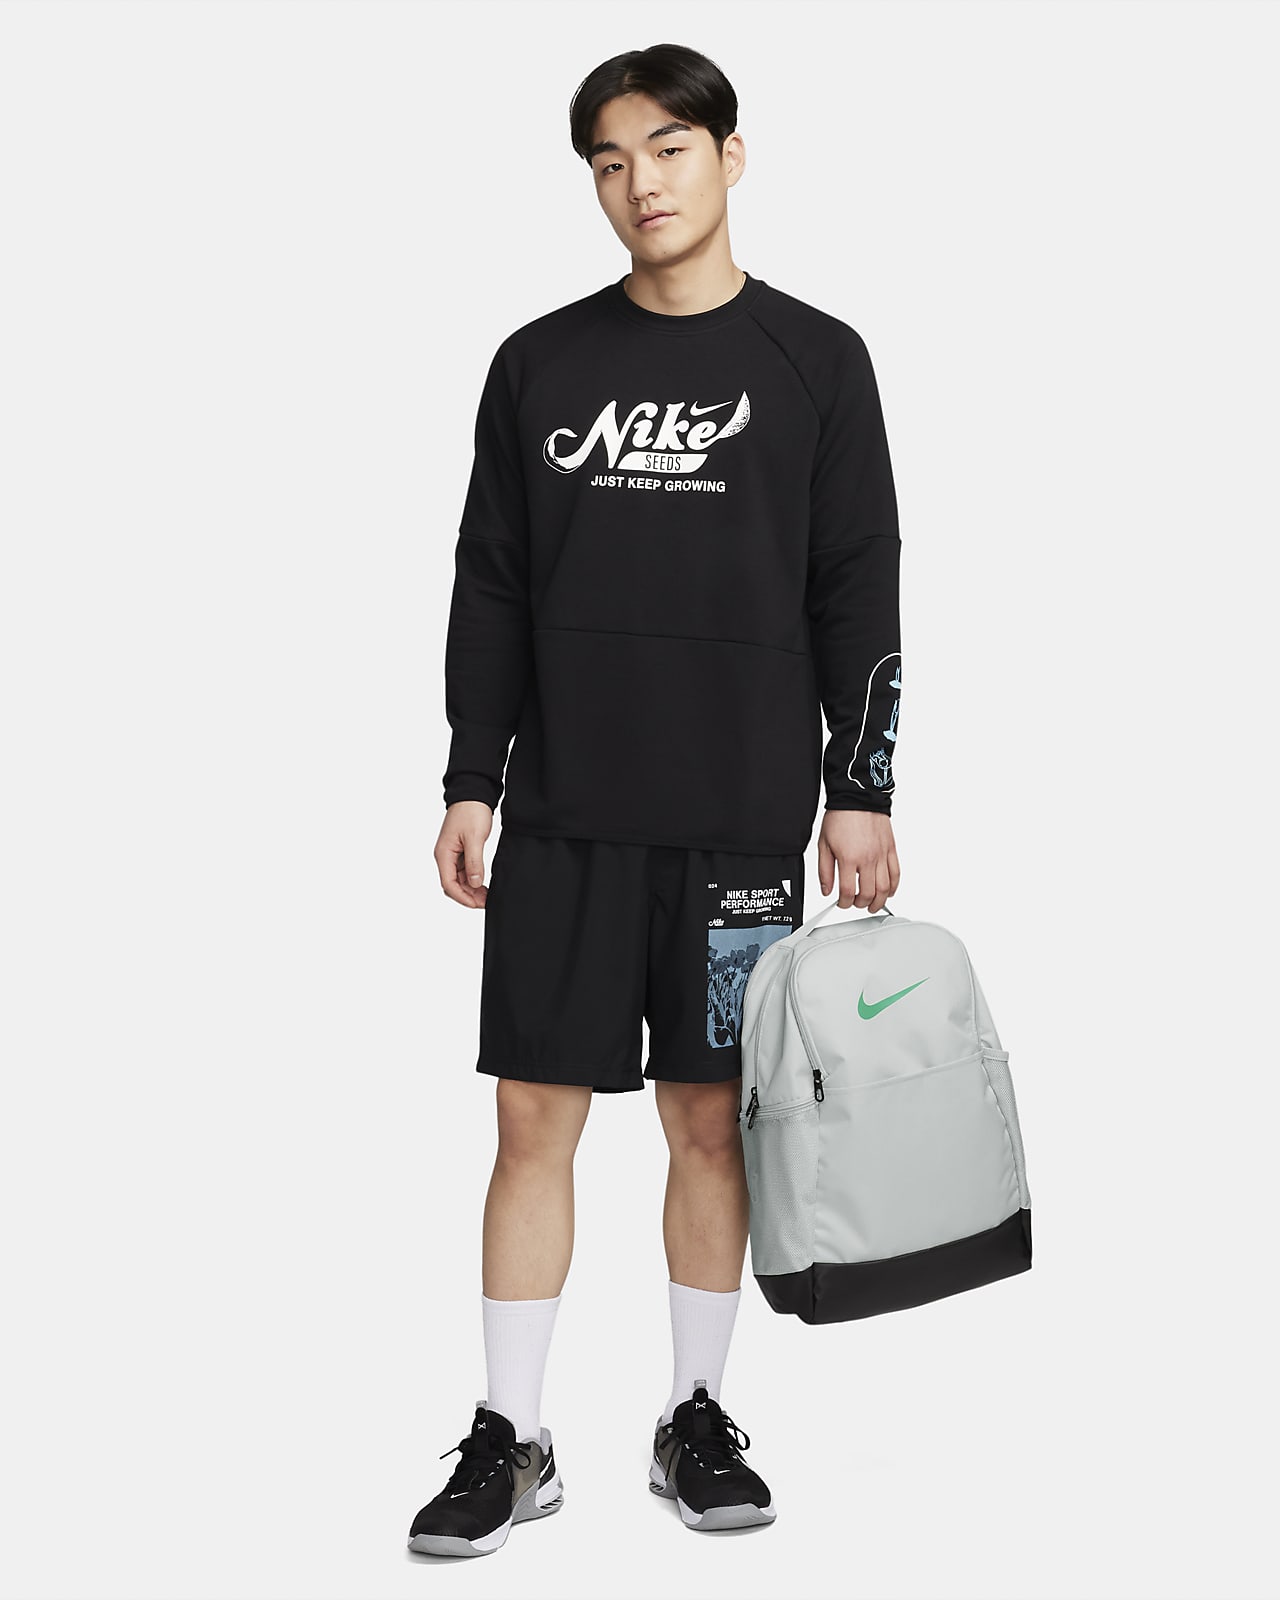 Buy Nike Black Brasilia 9.5 Training Backpack (Medium, 24L) from